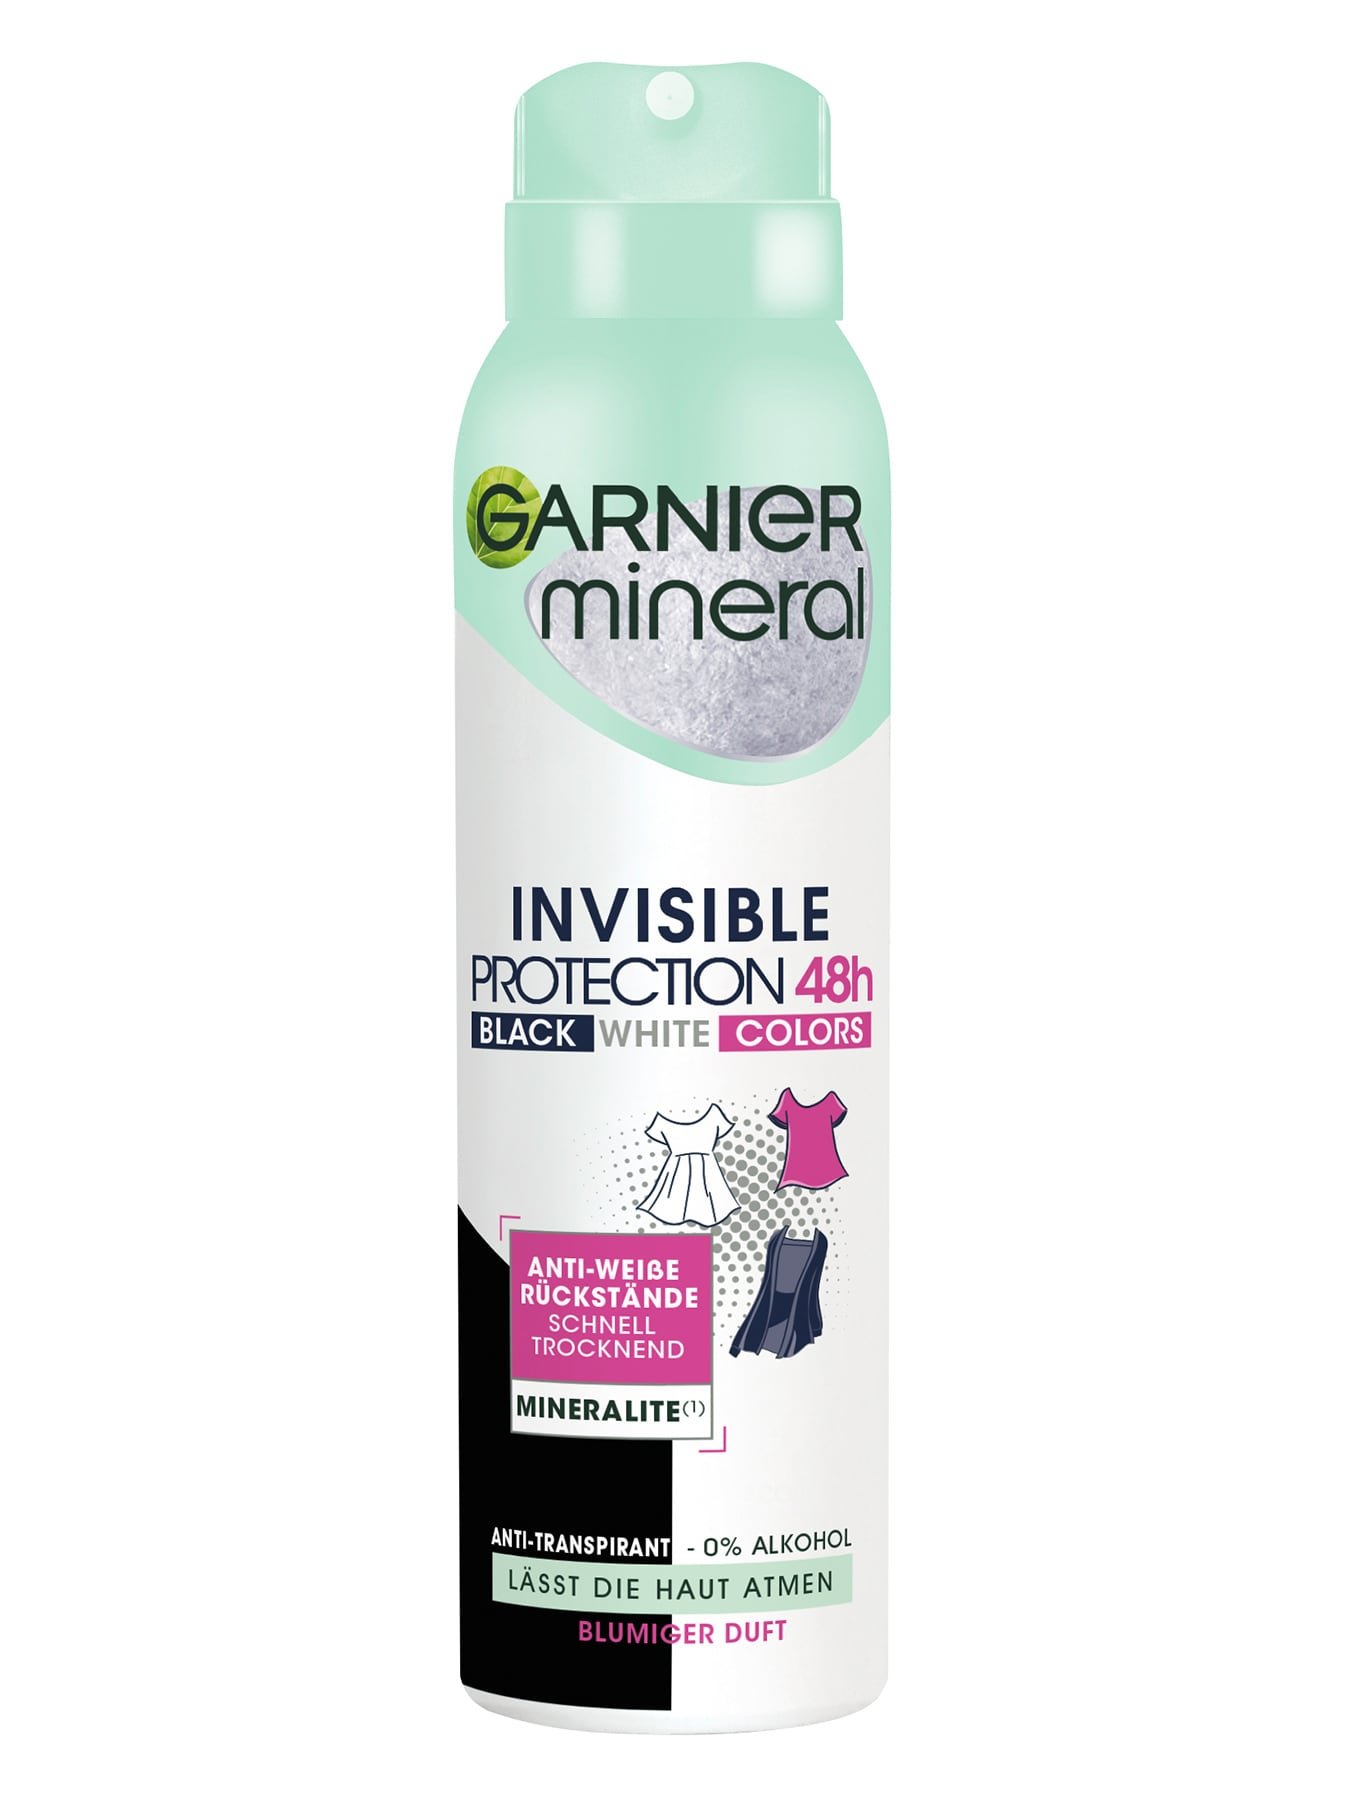 Mineral Invisible Black, White & Colors Spray Anti-Transpirant Produktbild